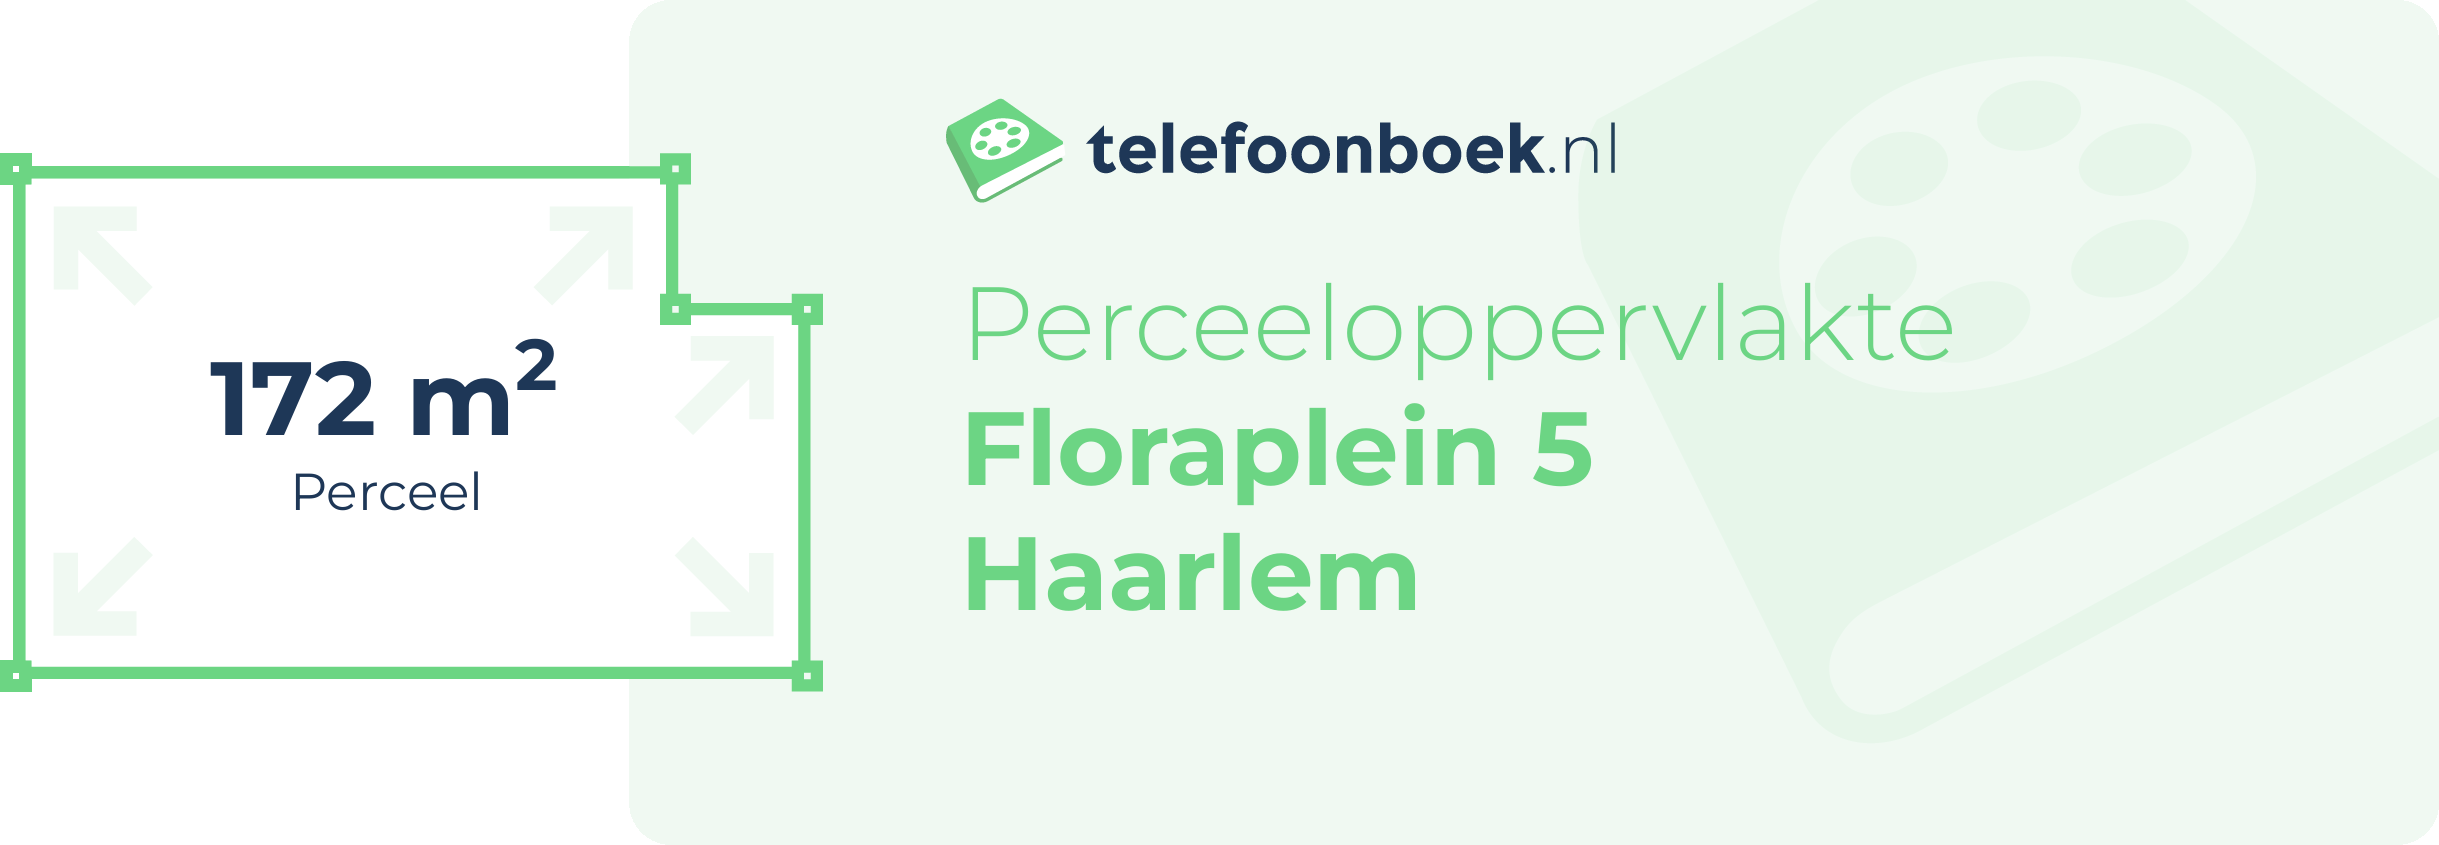 Perceeloppervlakte Floraplein 5 Haarlem